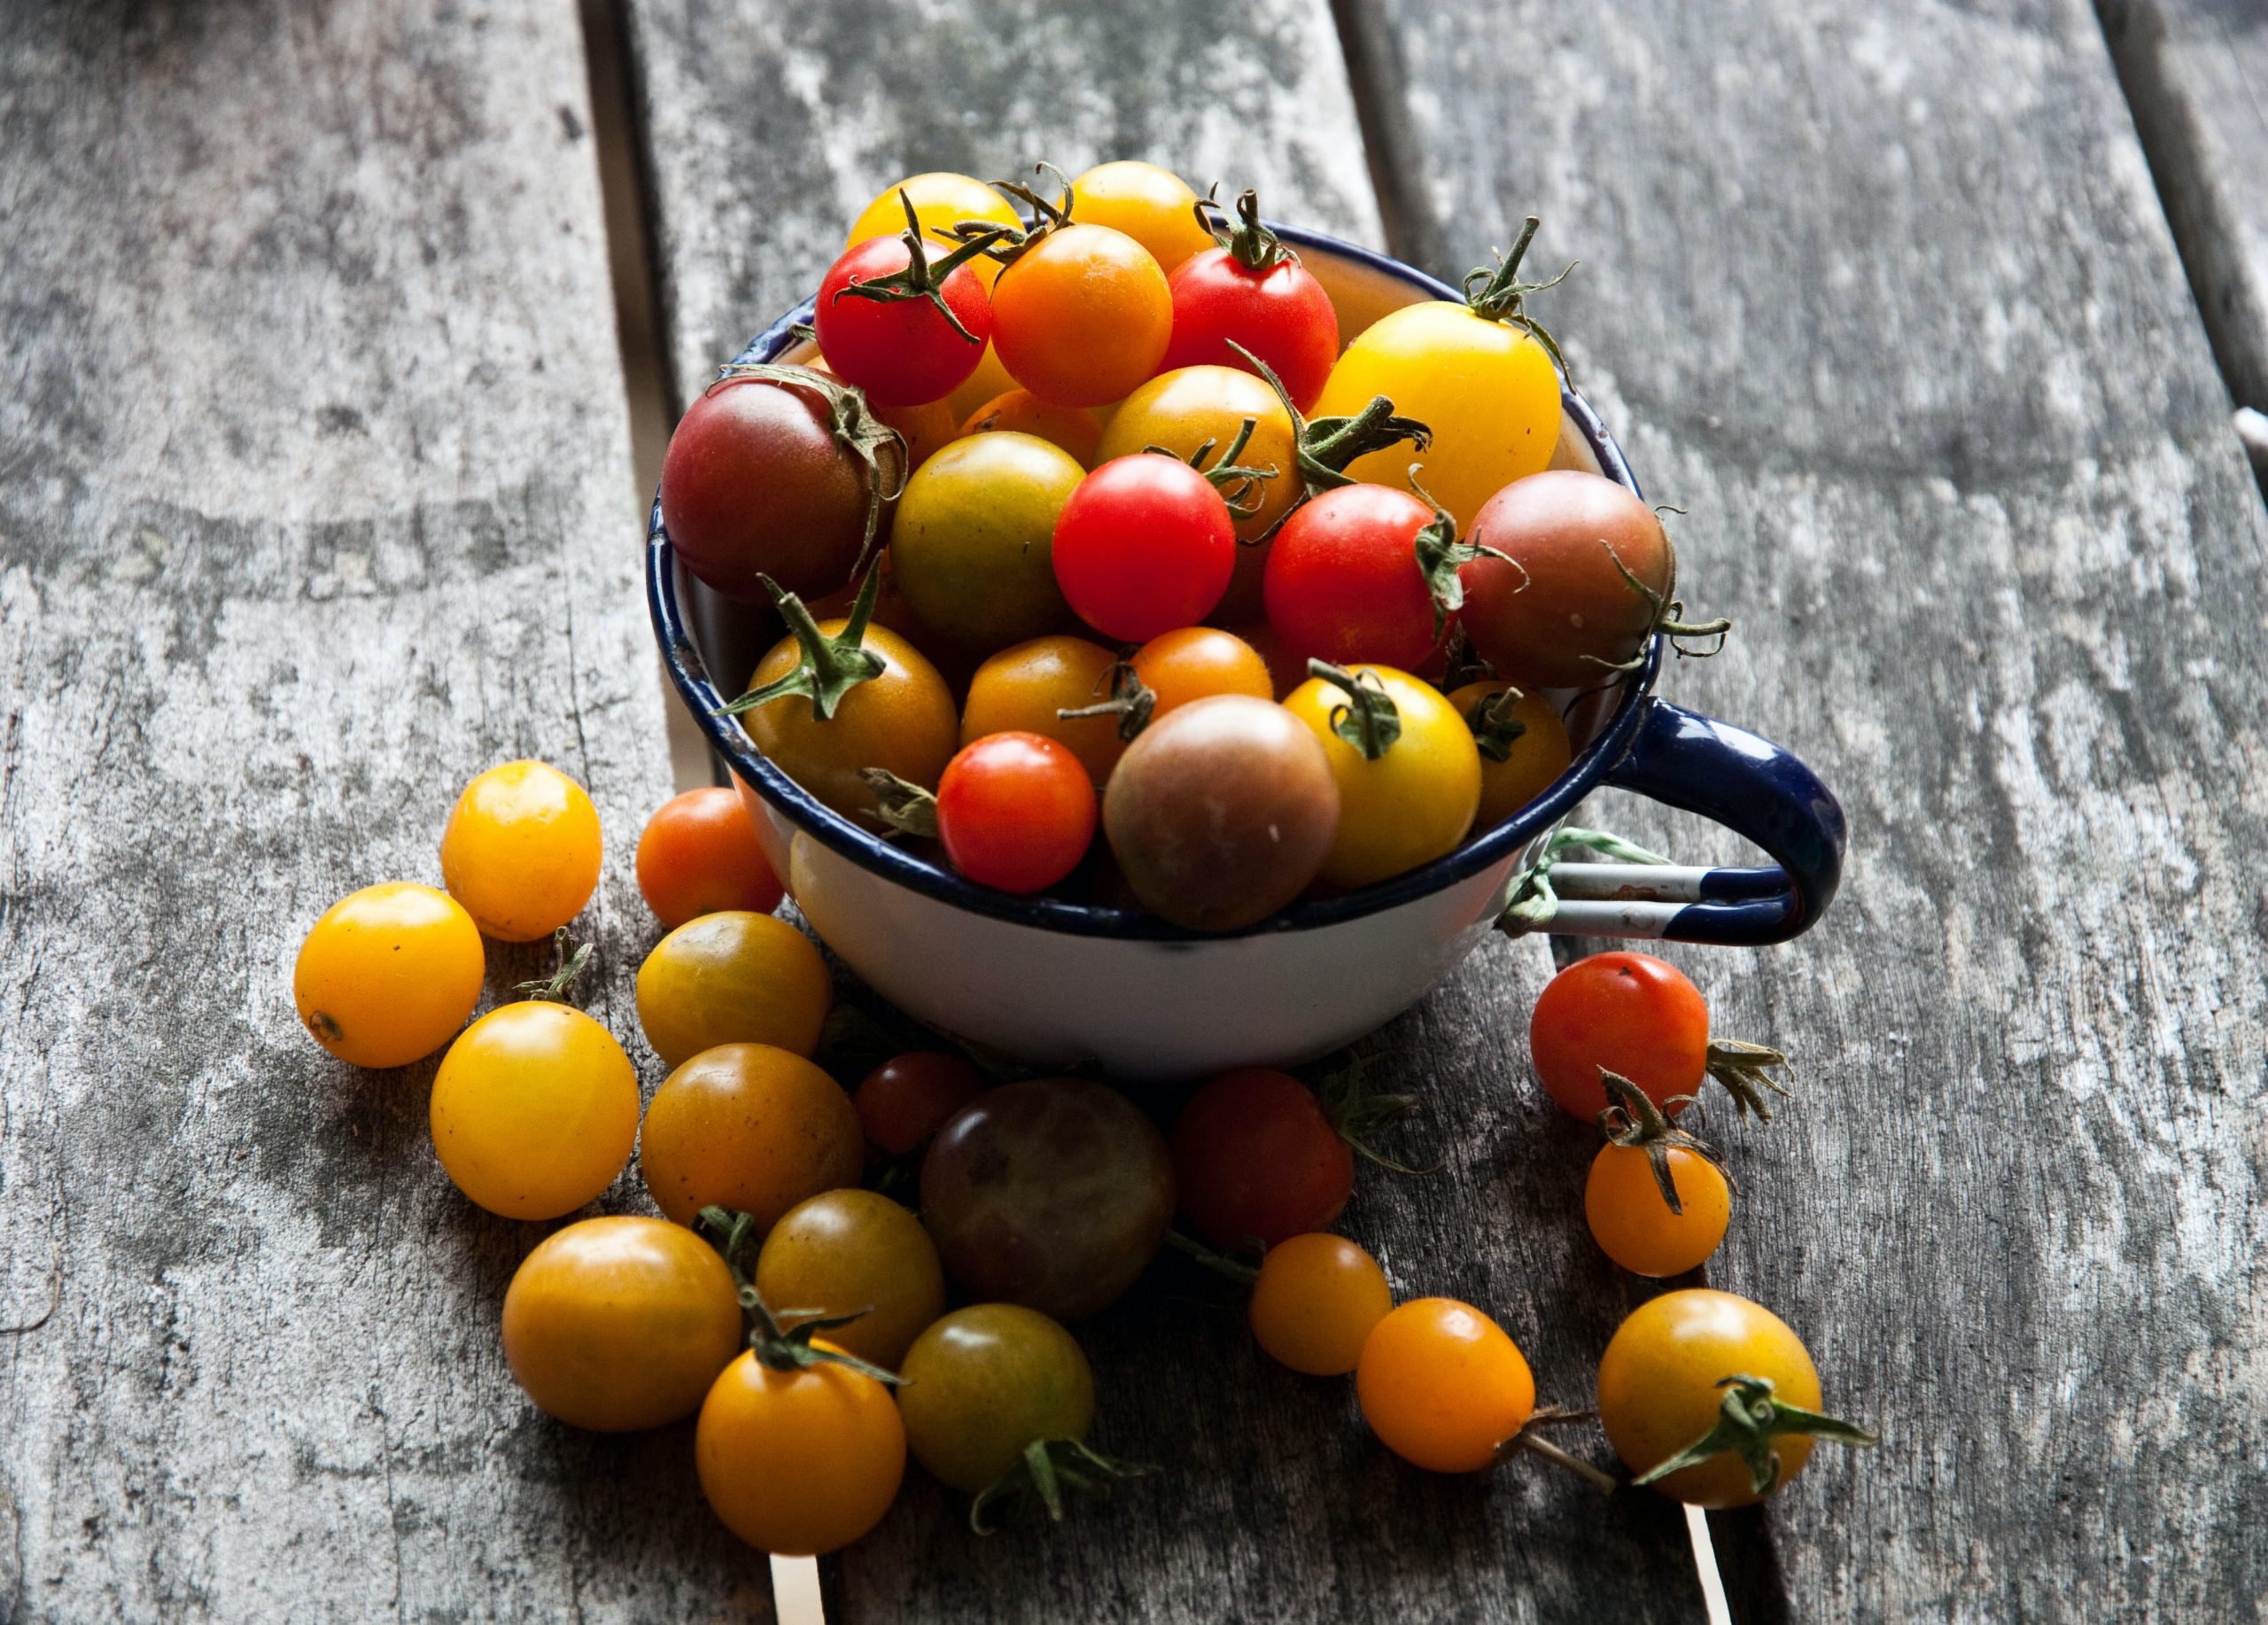 Why Do Cherry Tomatoes Taste Better Than Regular Tomatoes?